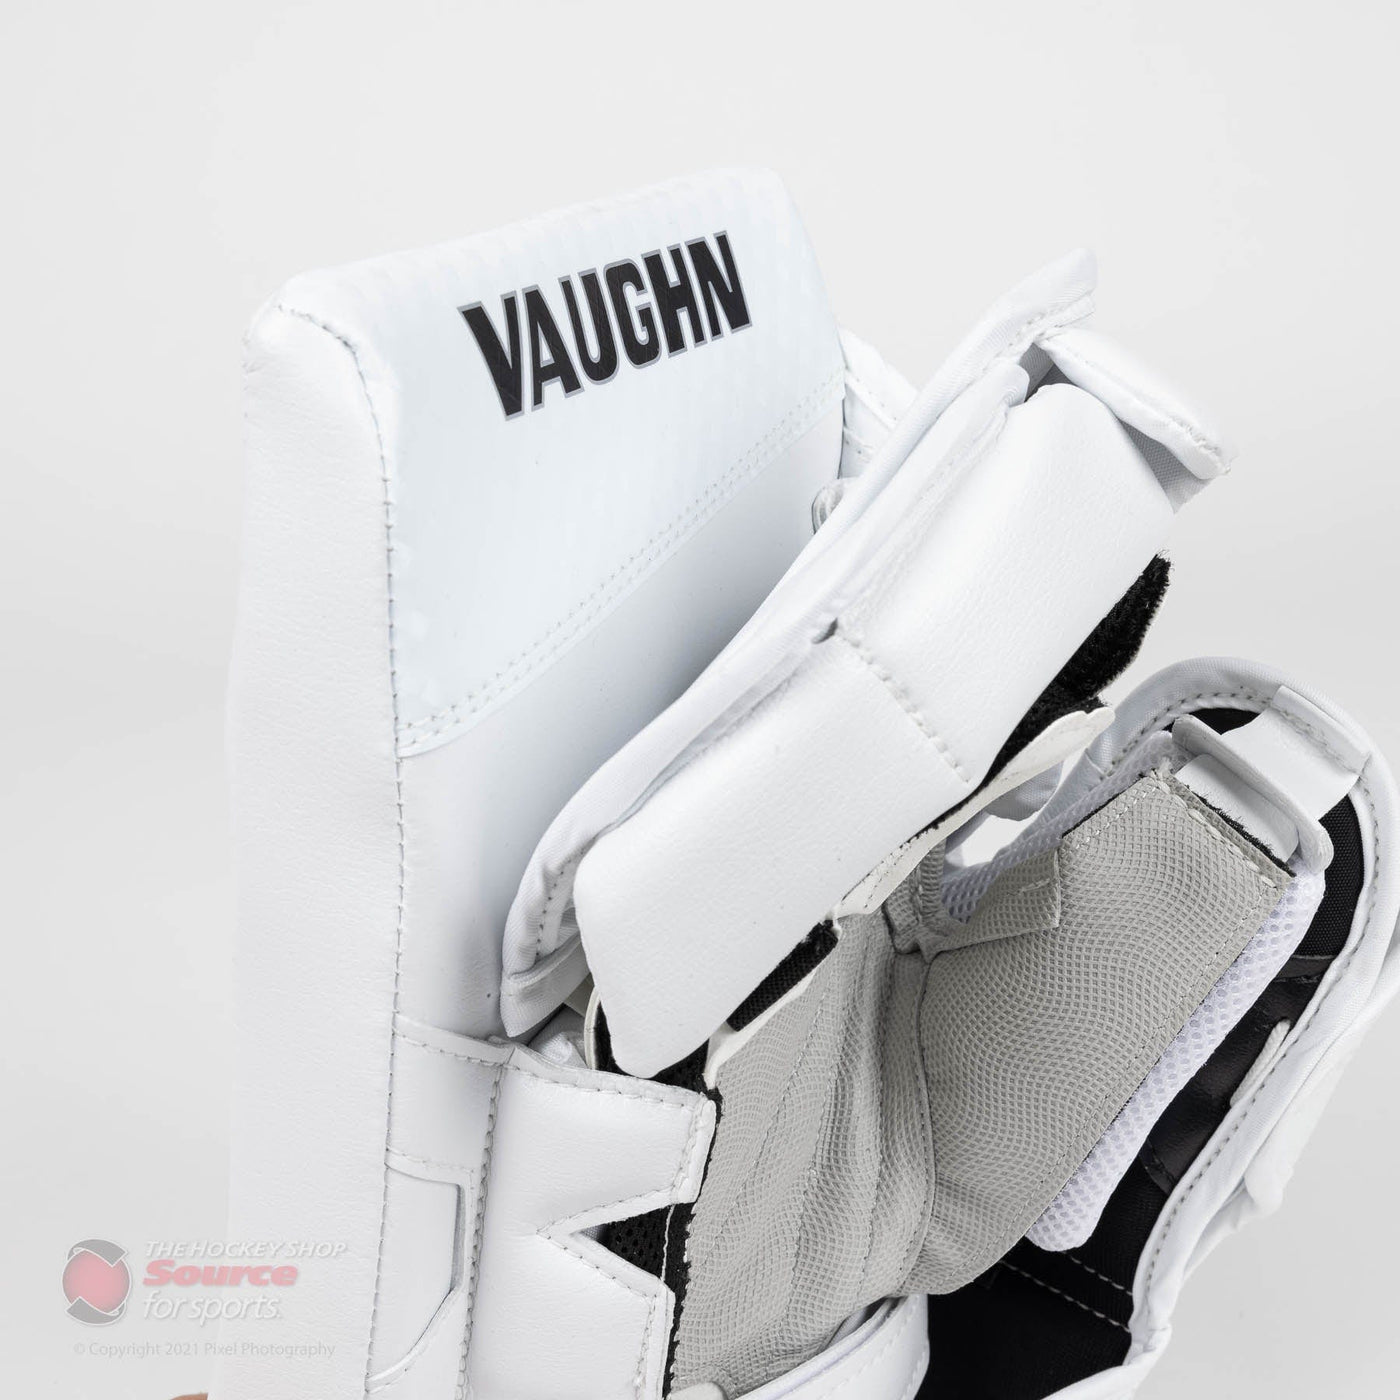 Vaughn Velocity V9 Pro Carbon Senior Goalie Blocker - Vintage Graphic